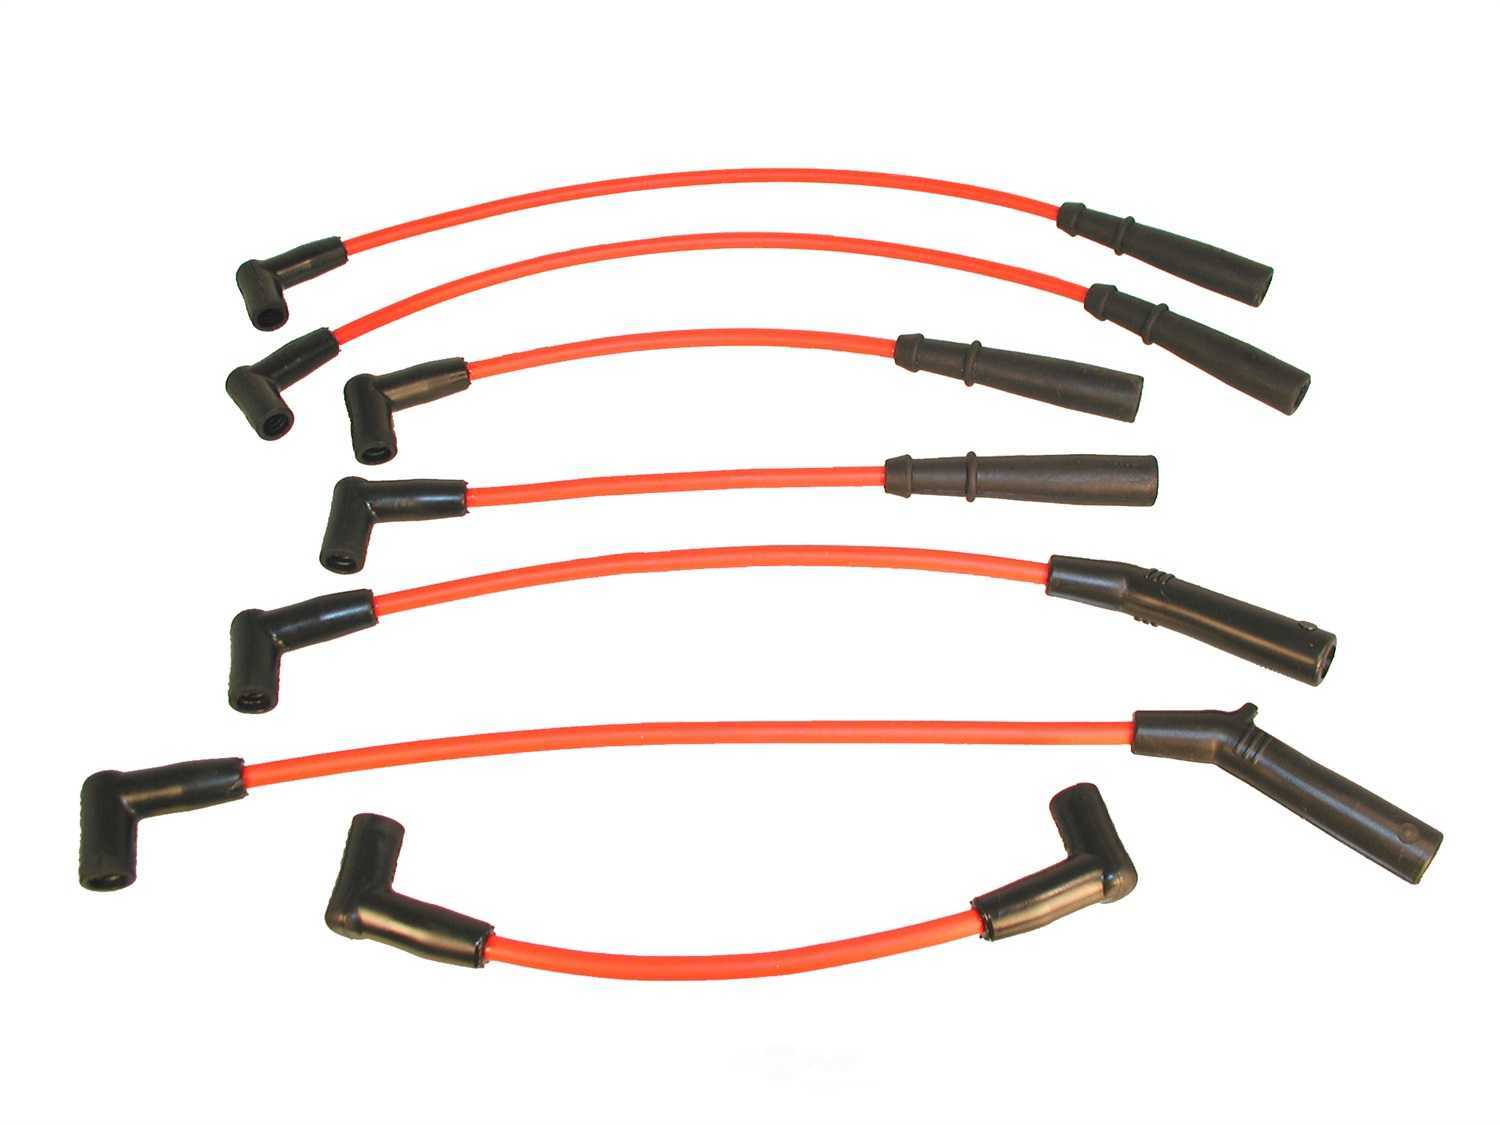 KARLYN/STI - Karlyn-STI Spark Plug Wire Set - KLY 625